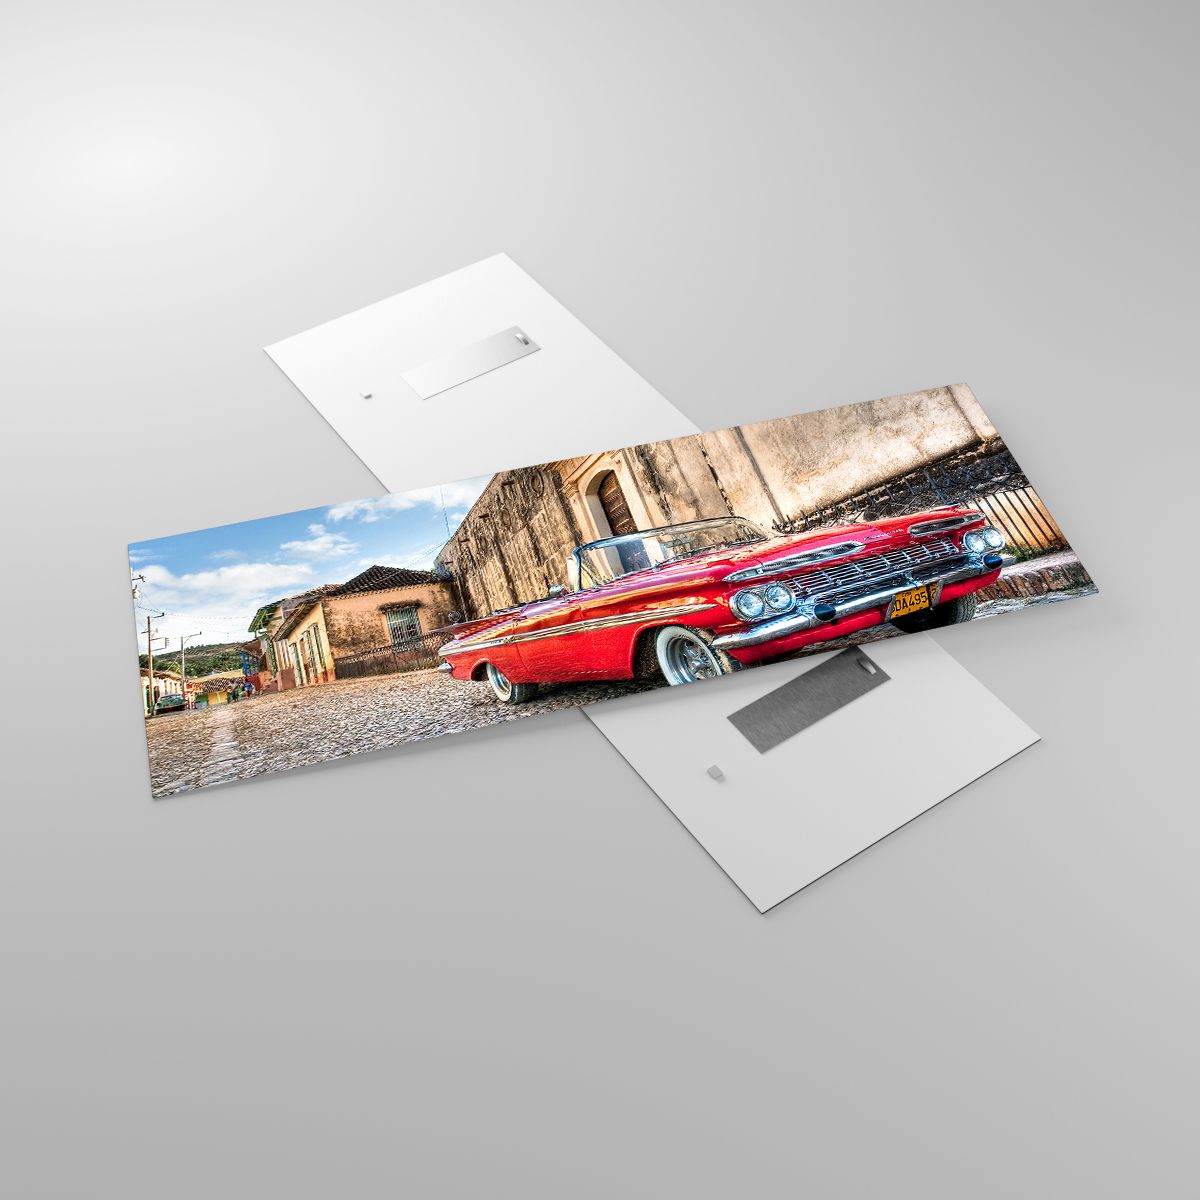 Glasbild Automobil, Glasbild Auto, Glasbild Kuba, Glasbild Cabriolet, Glasbild Altes Auto